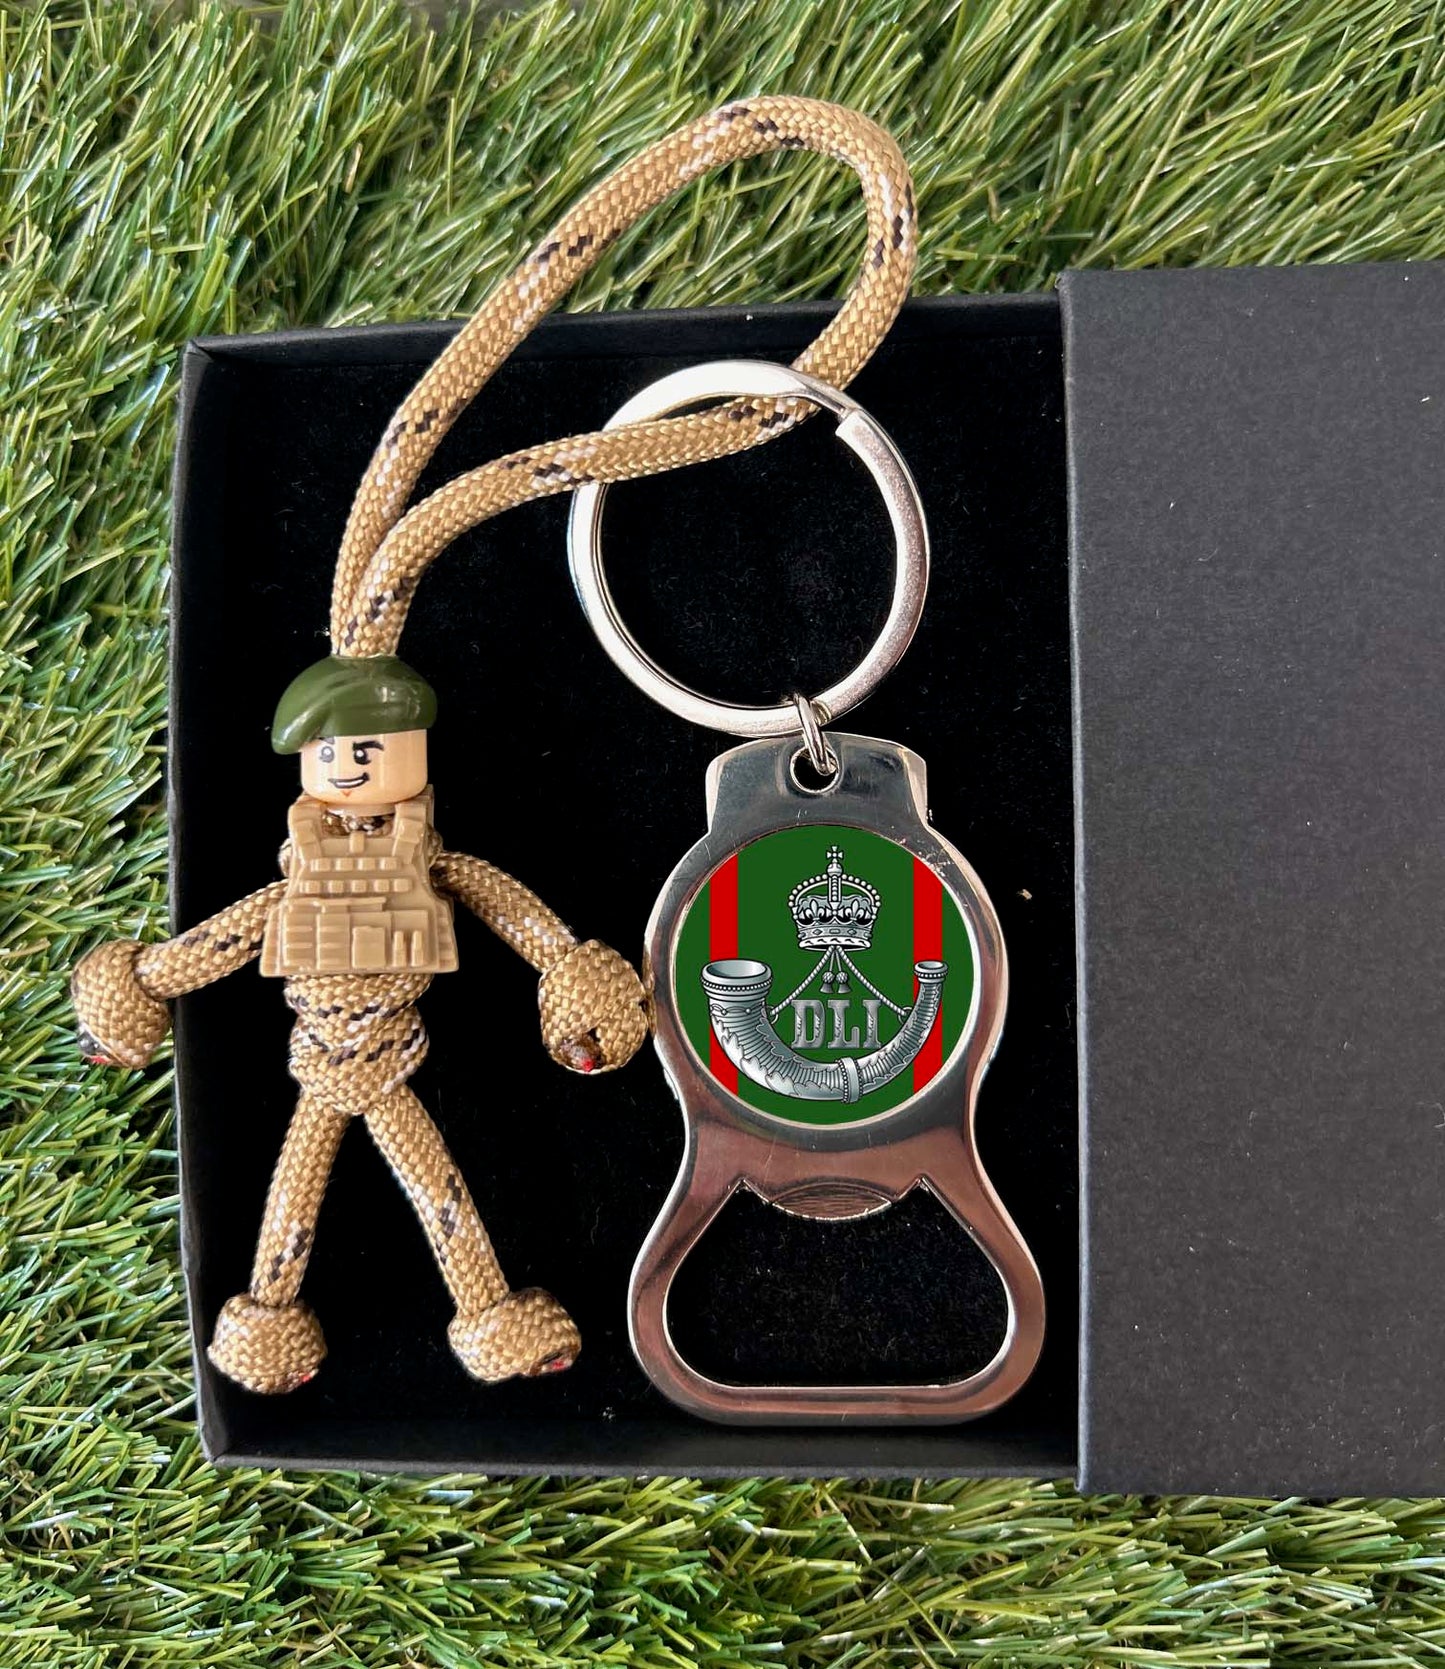 Durham Light Infantry - pBuddies' Paracord Keychains and Key Ring Bottle Opener